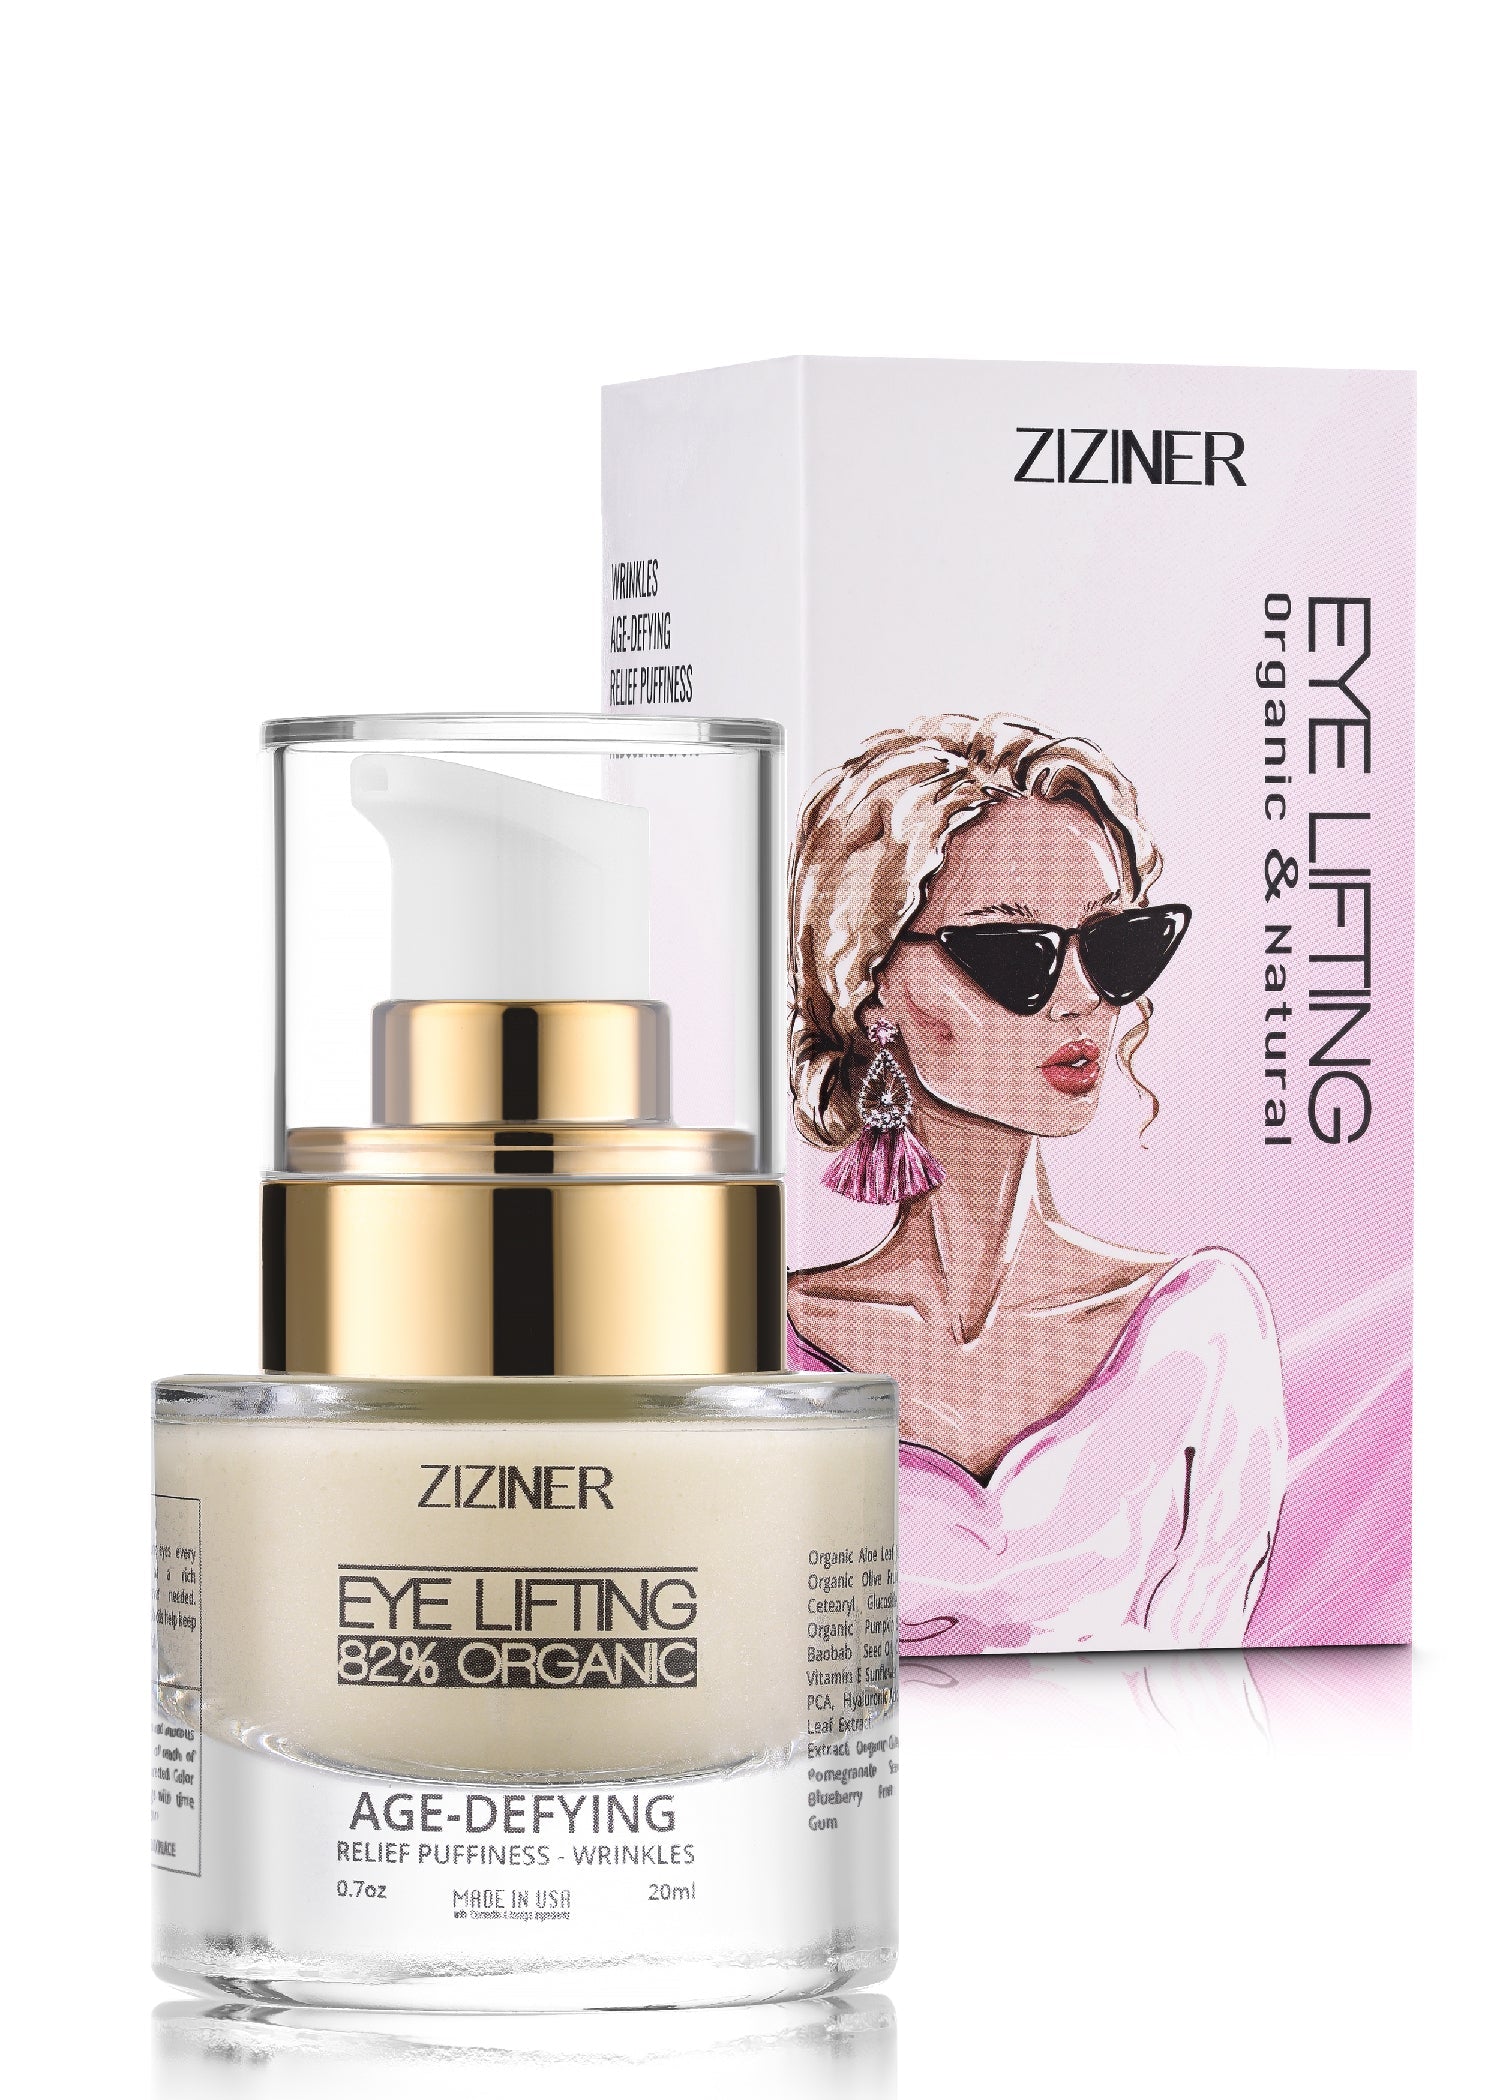  Organic Eye Lifting Ziziner Skincare shop Perfumarie